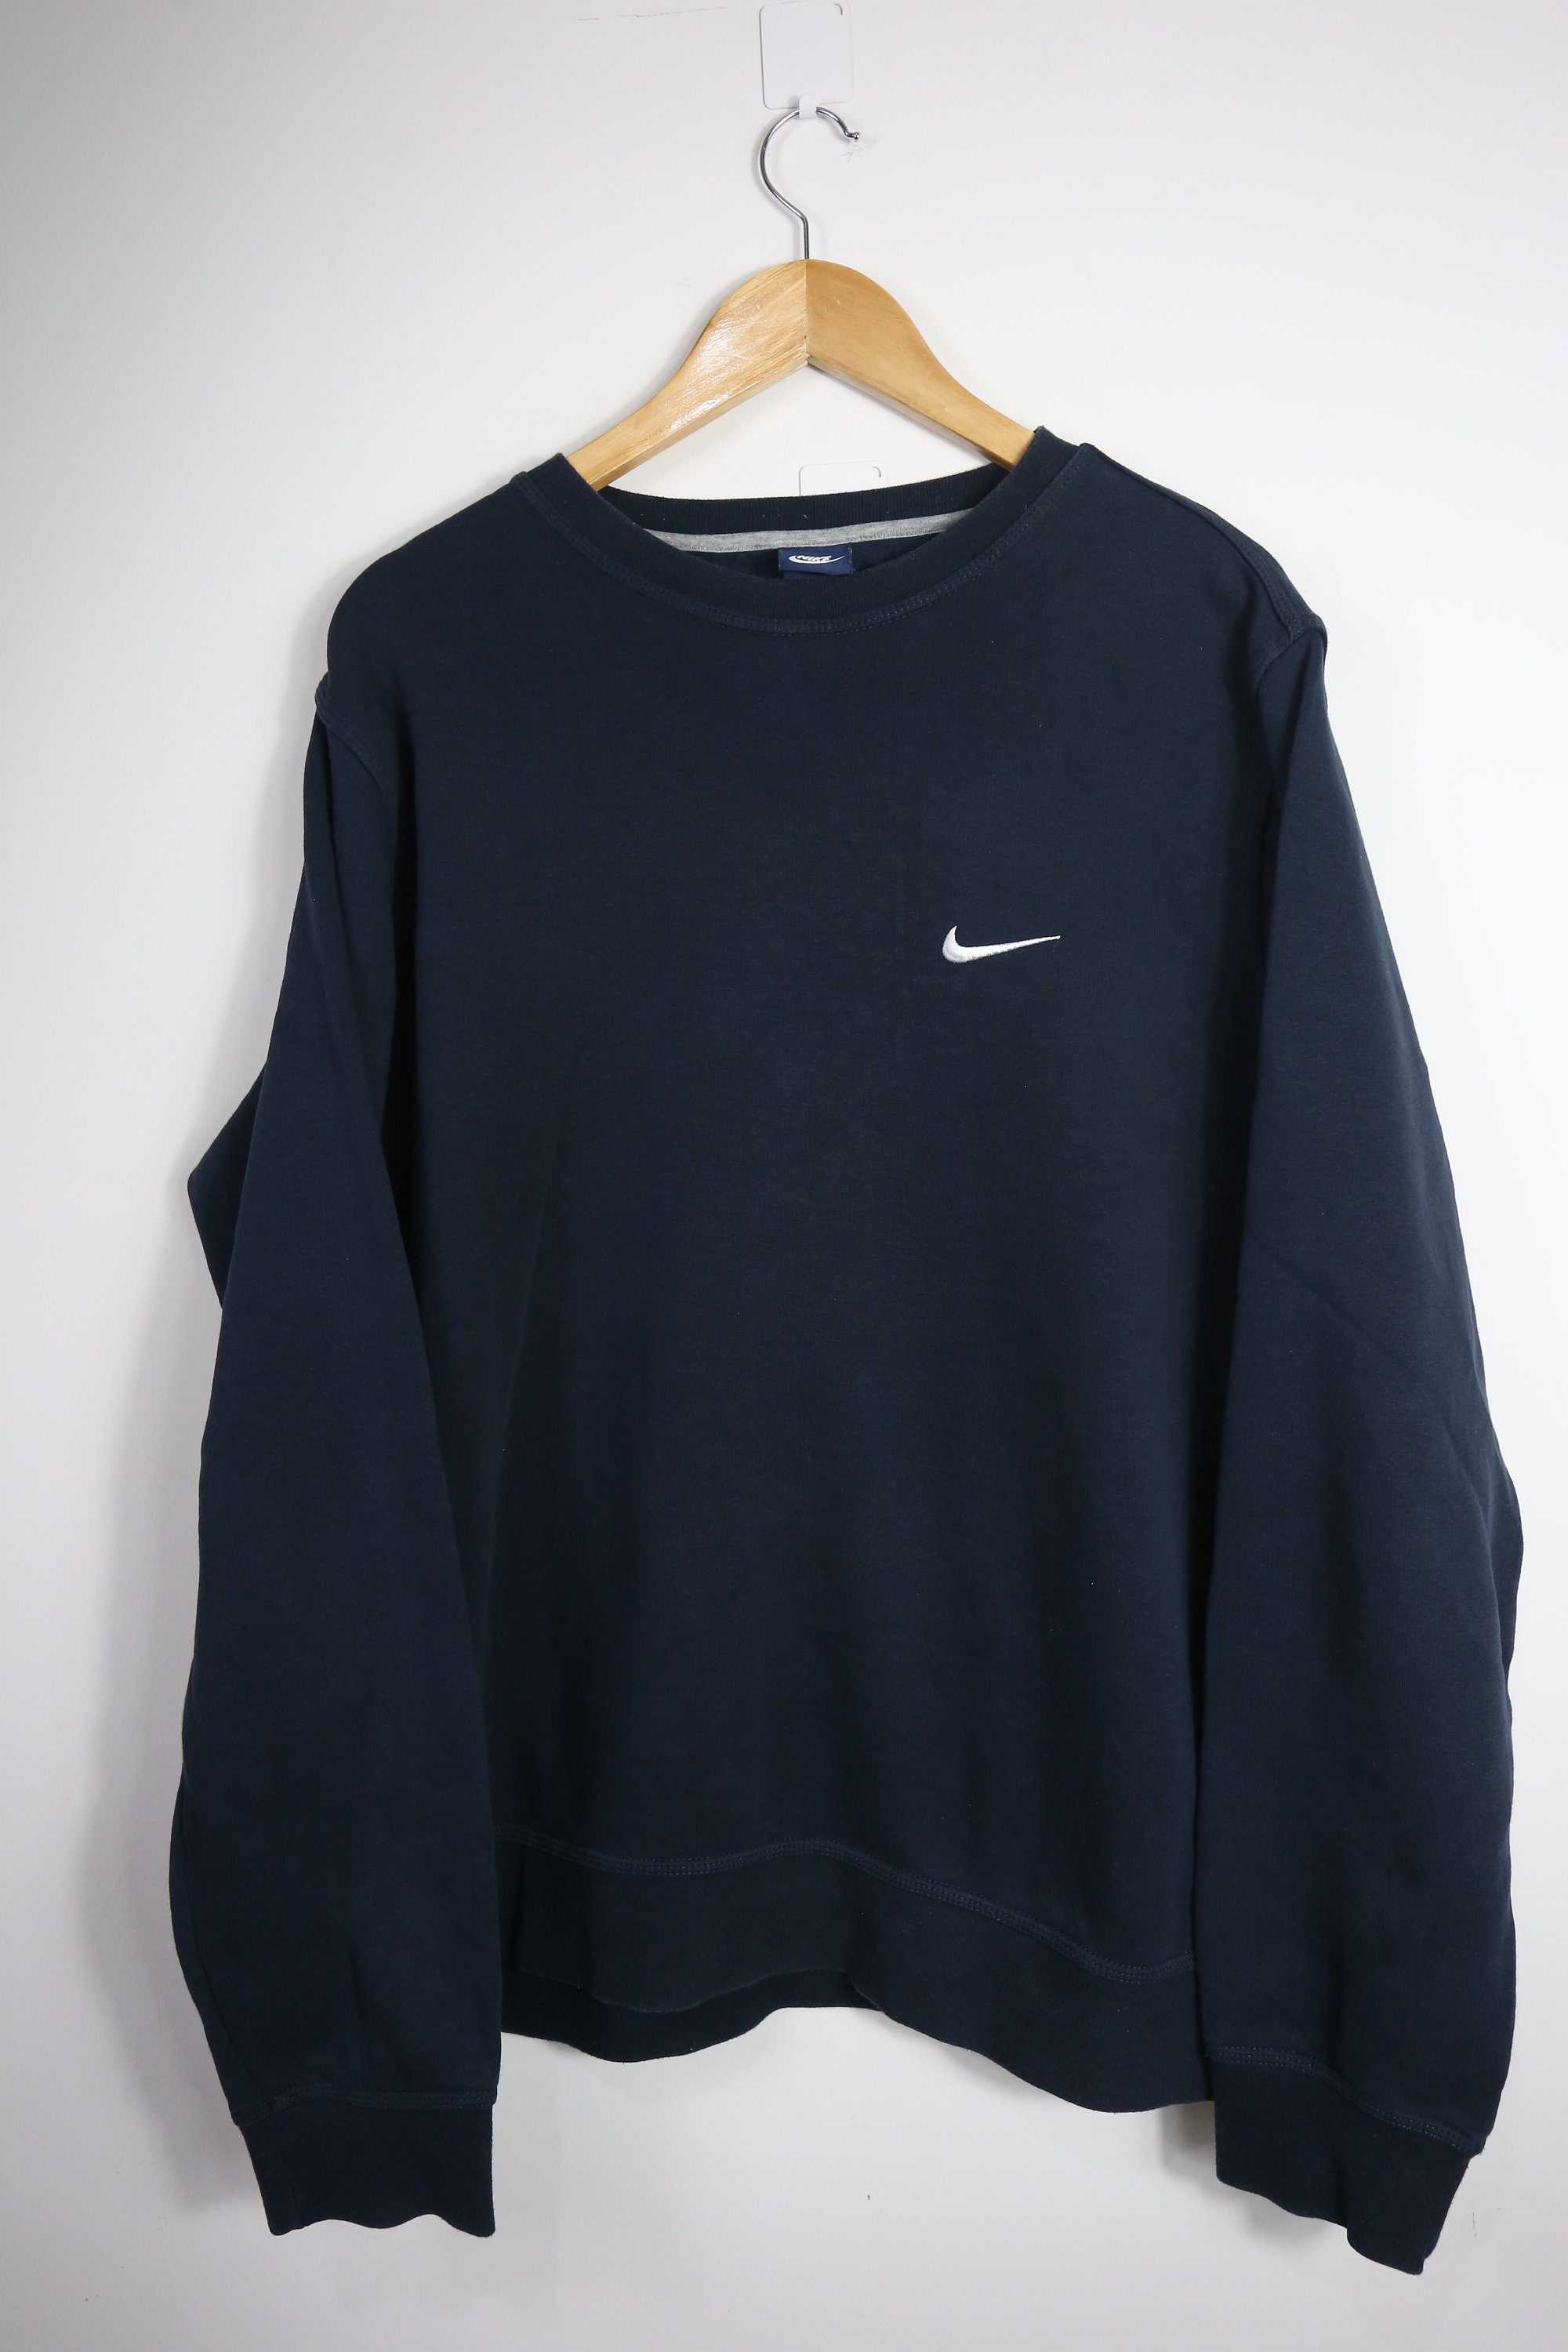 Nike Mini Swoosh sweater in Navy Blue XL | Etsy